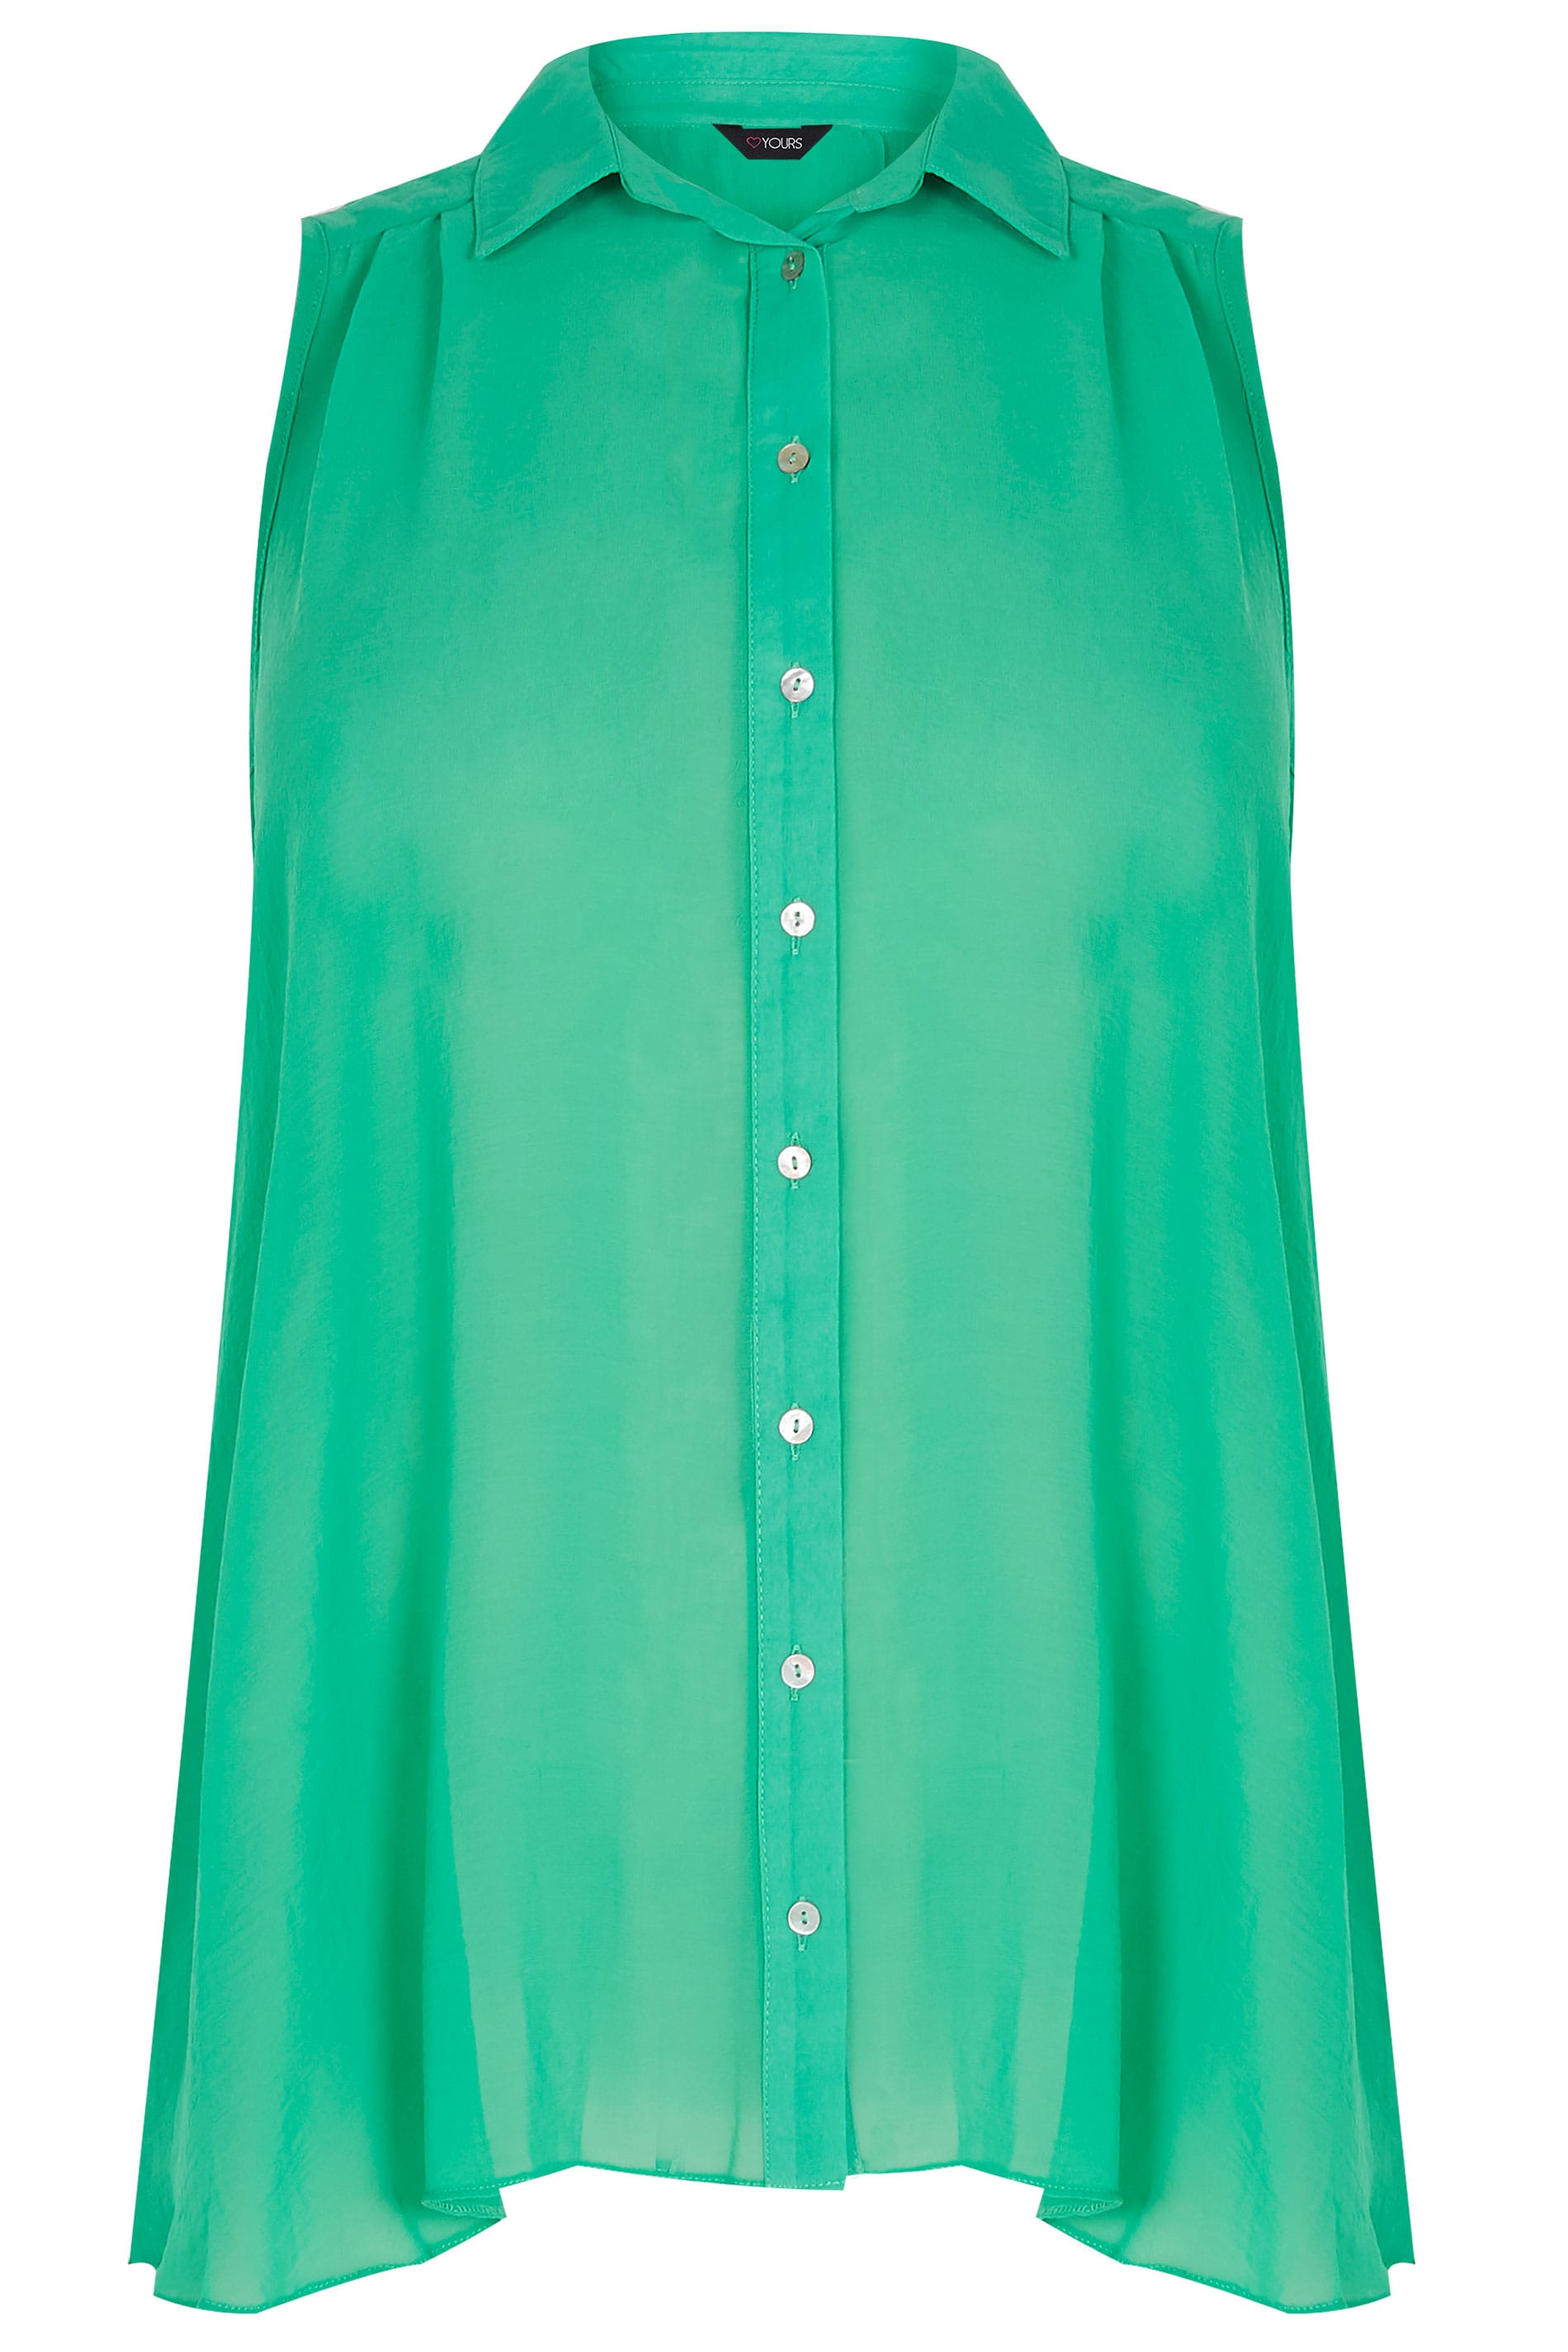 SIZE UP Green Sleeveless Shirt | Sizes 16 to 32 | Yours Clothing